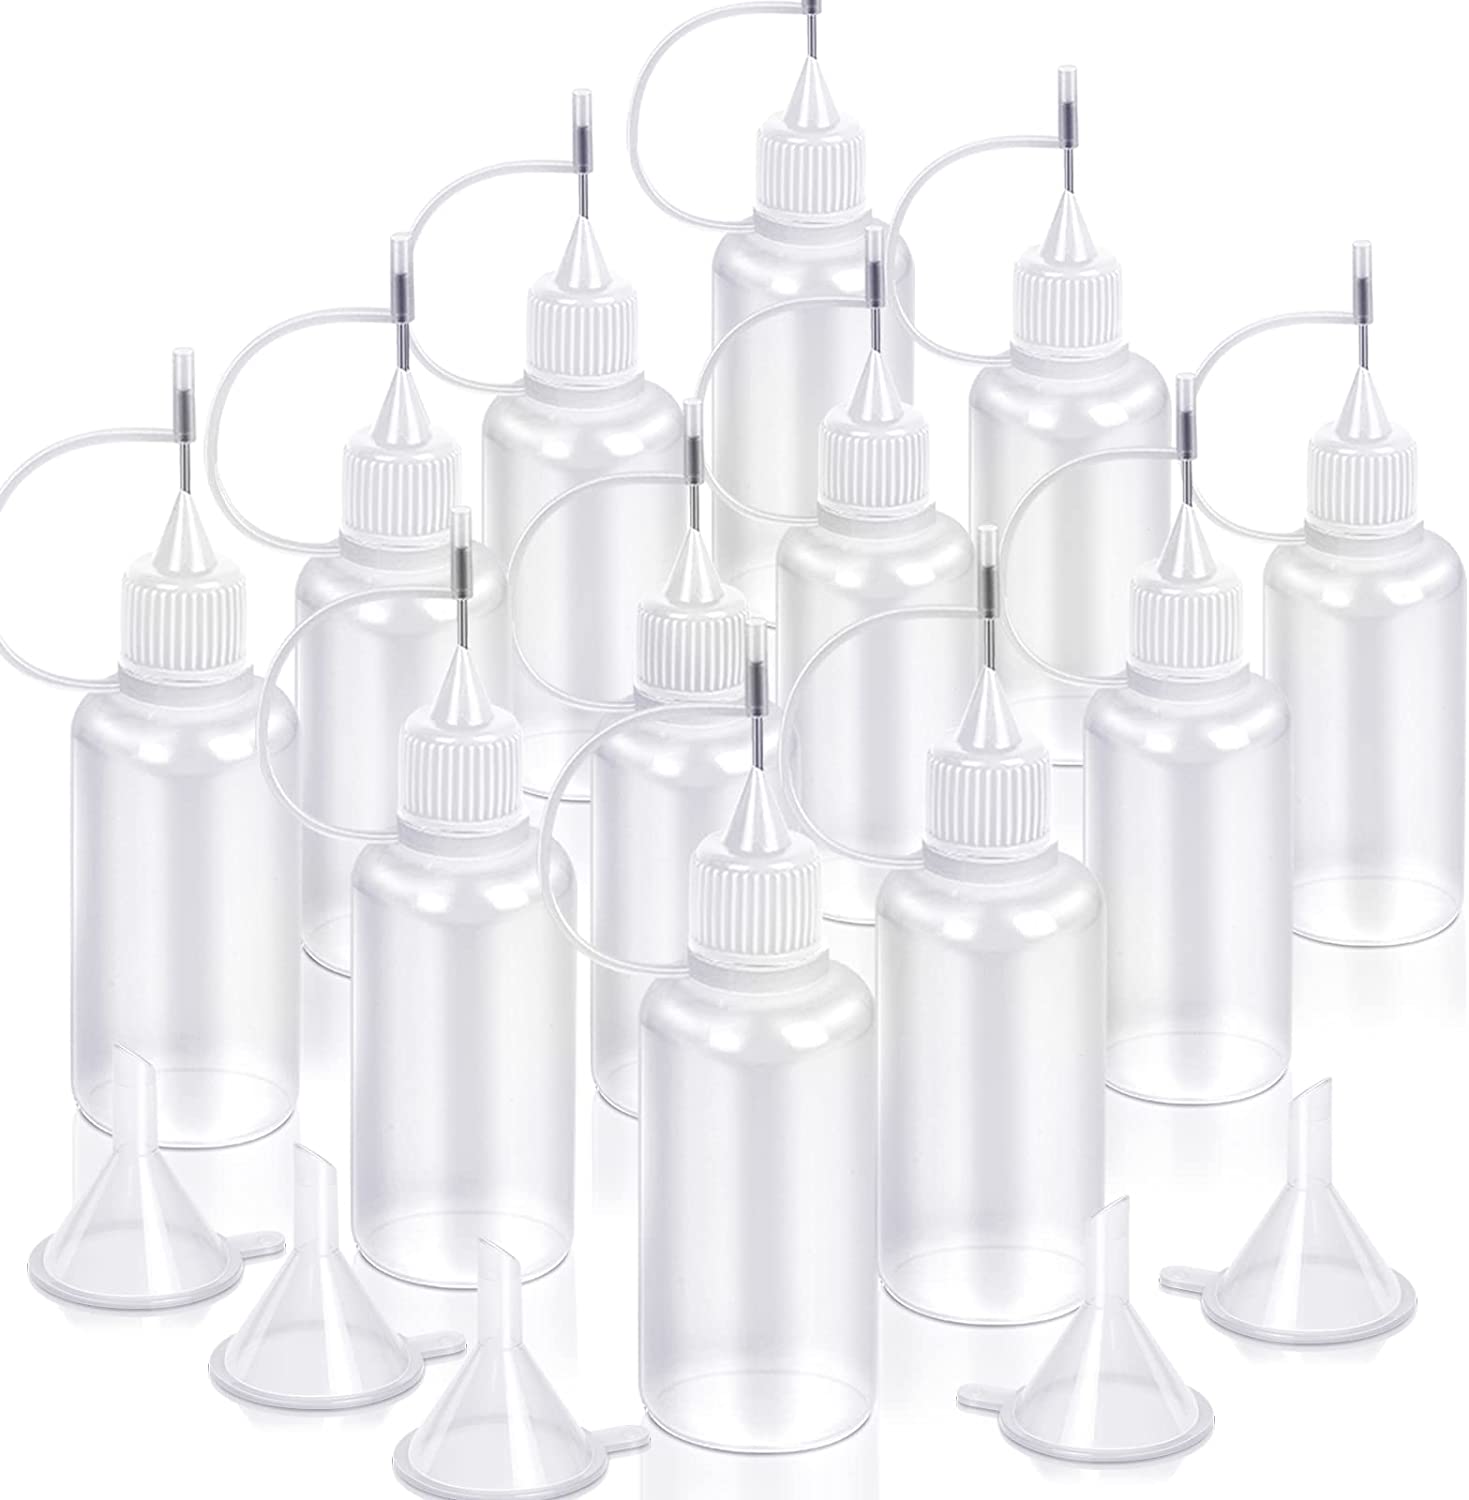  YGDZ Precision Tip Applicator Bottles, 12 Pcs 1oz Needle Fine  Tip Glue Bottles Precision Applicator Bottles with 5 Mini Funnels :  Industrial & Scientific